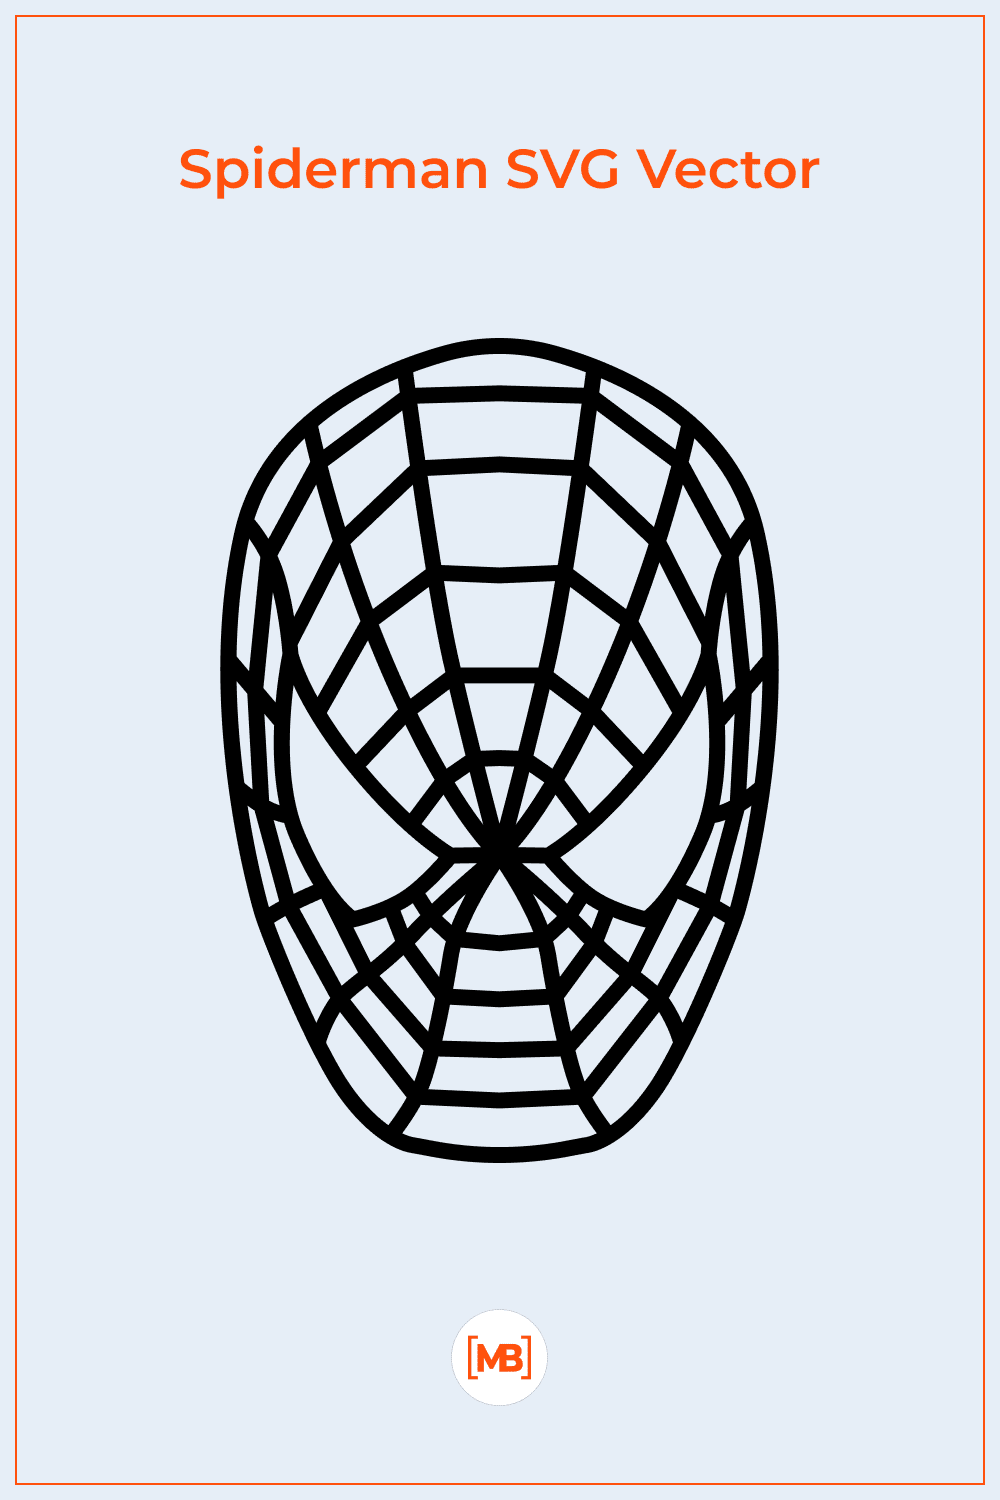 Spiderman SVG Vector.